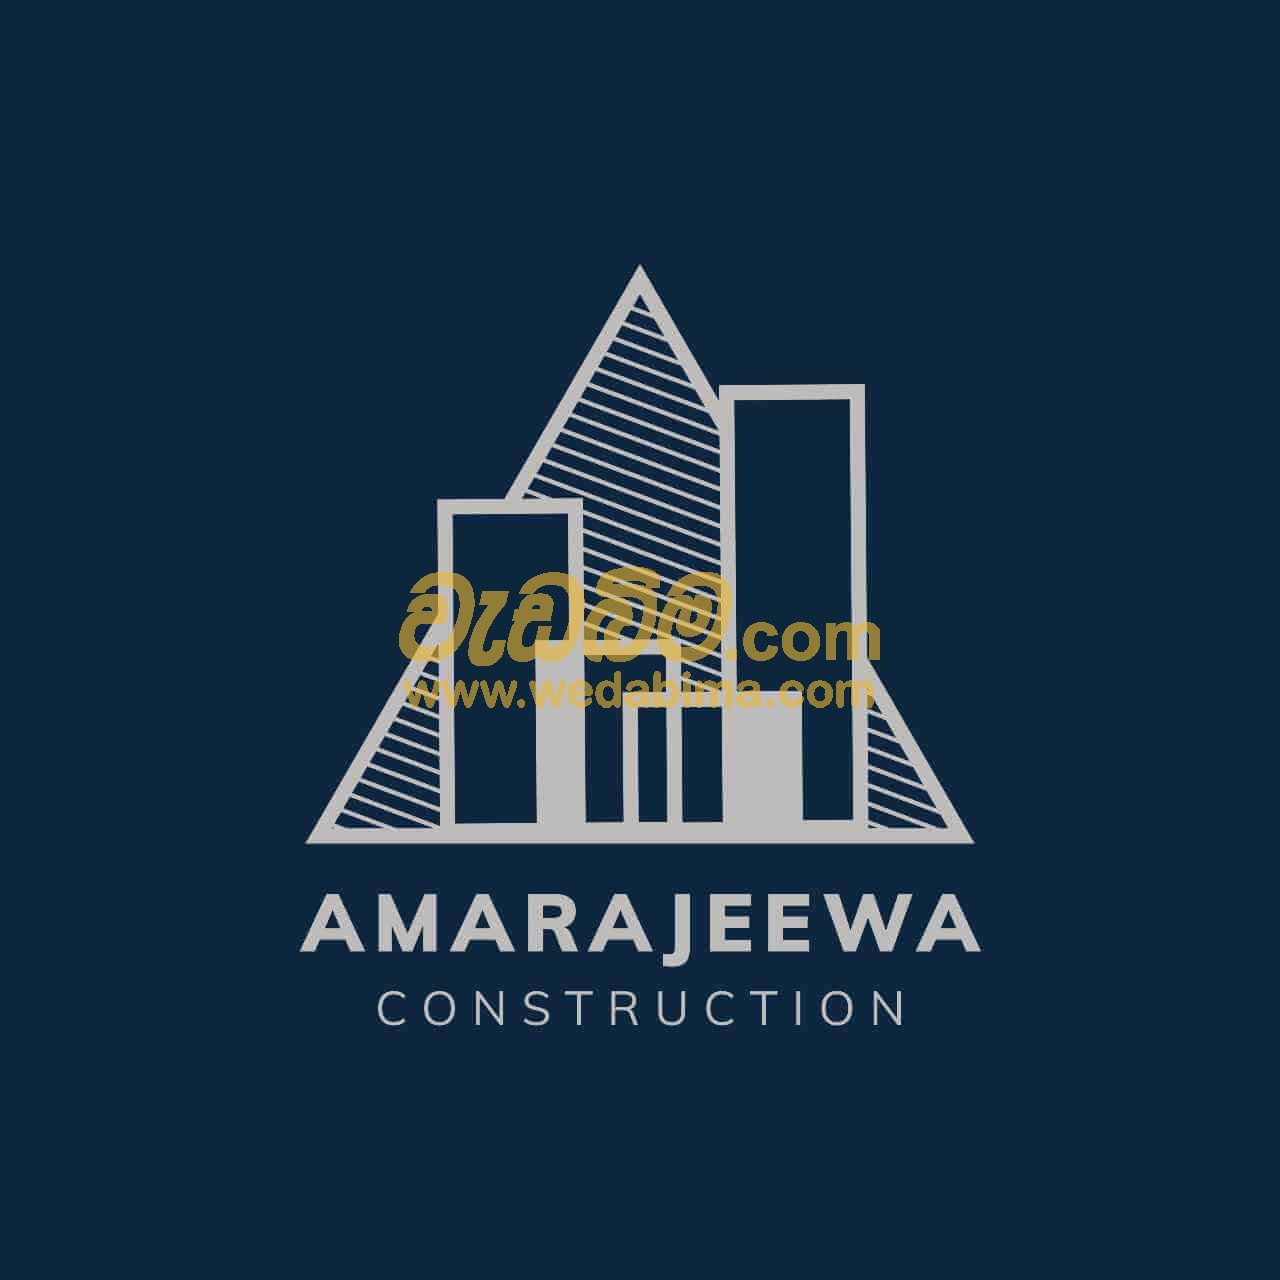 Amarajeewa Construction